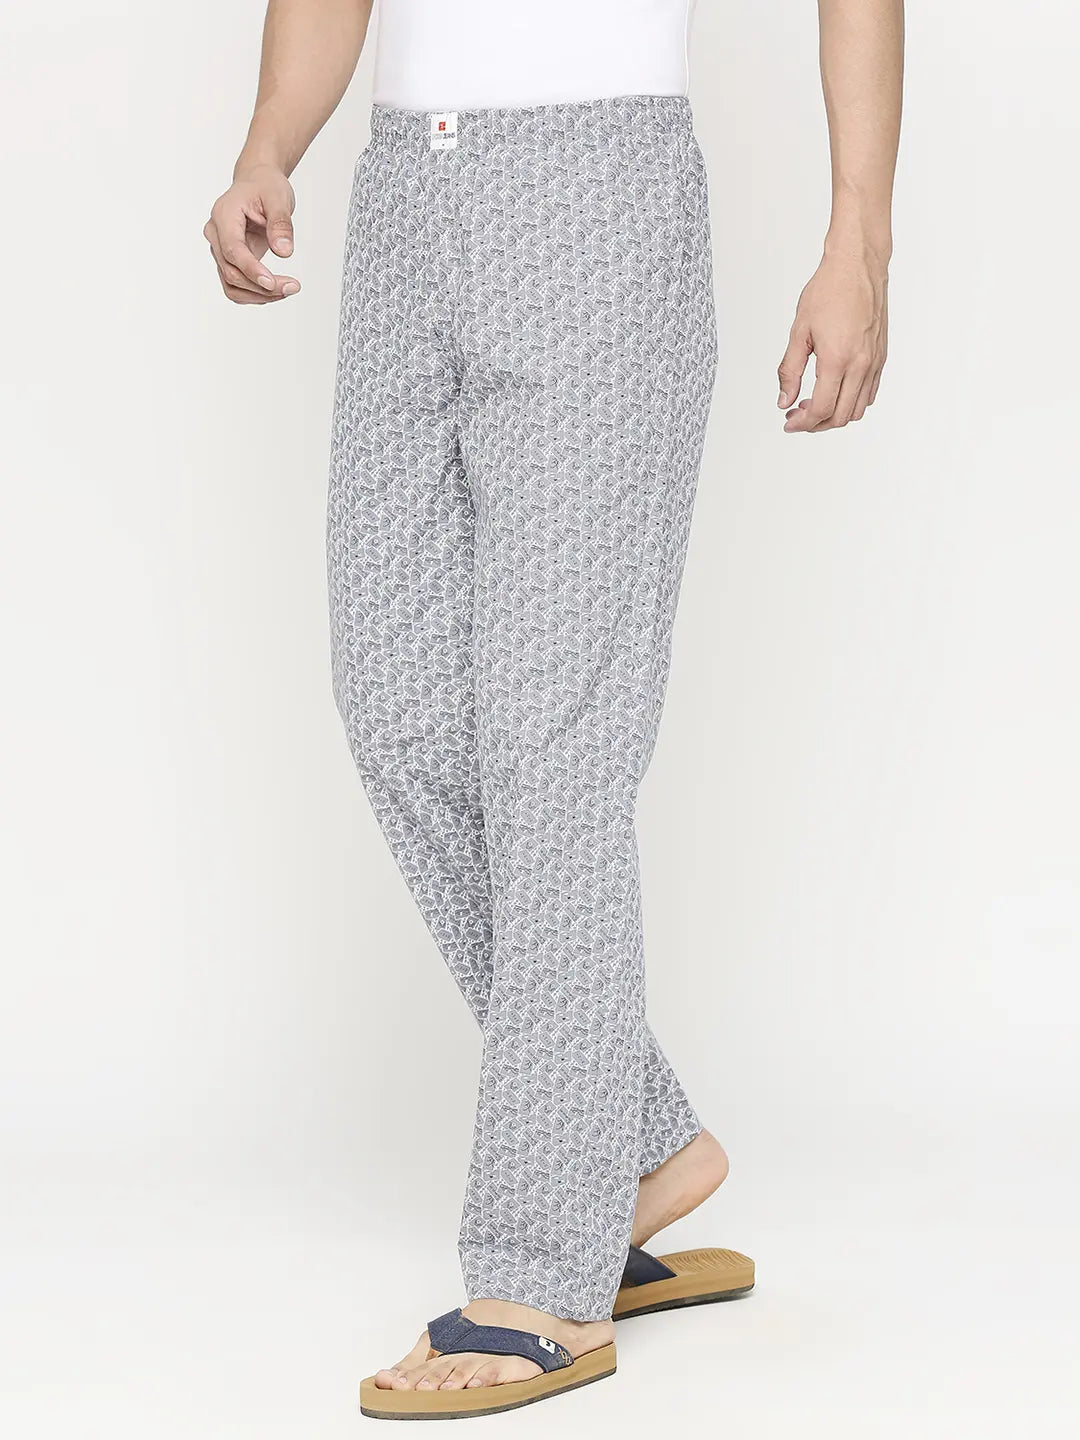 Men's Moisture-Wicking Pants | Men's Pajamas For Night Sweats – Cool-jams